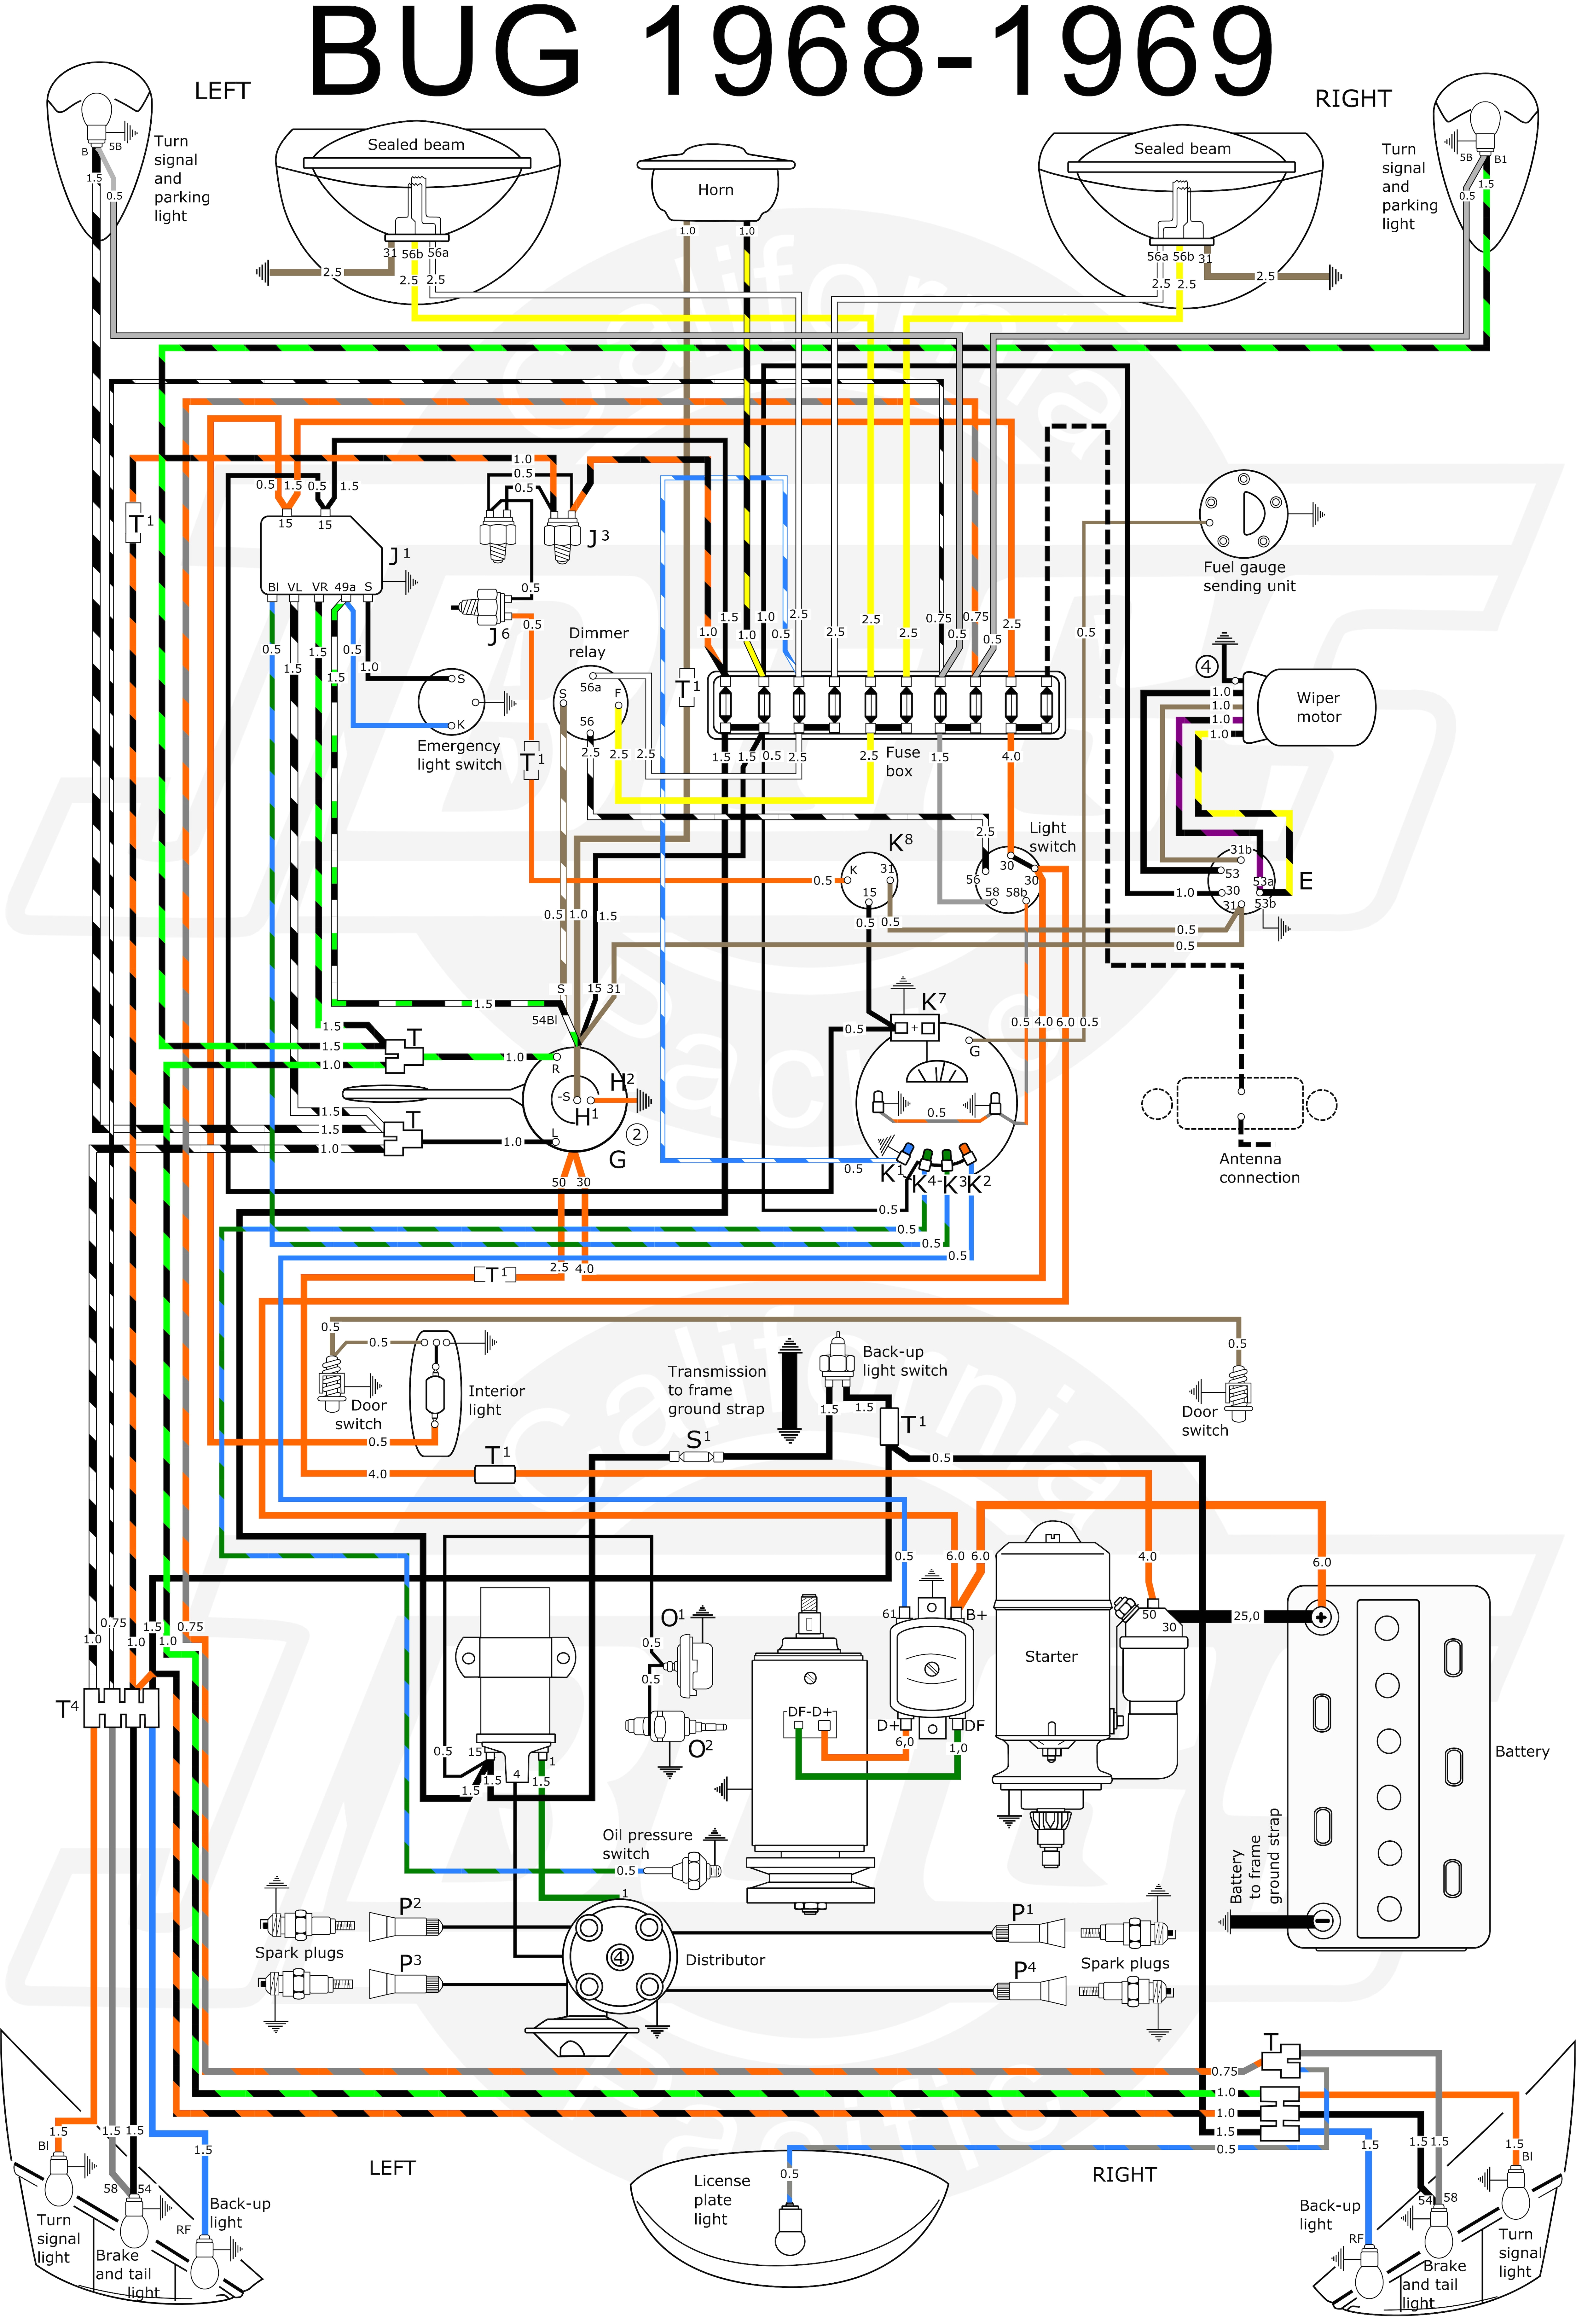 wiring diagram besides 1968 vw beetle bug volkswagen on 1973 vw bug wiring diagram for 1973 vw beetle